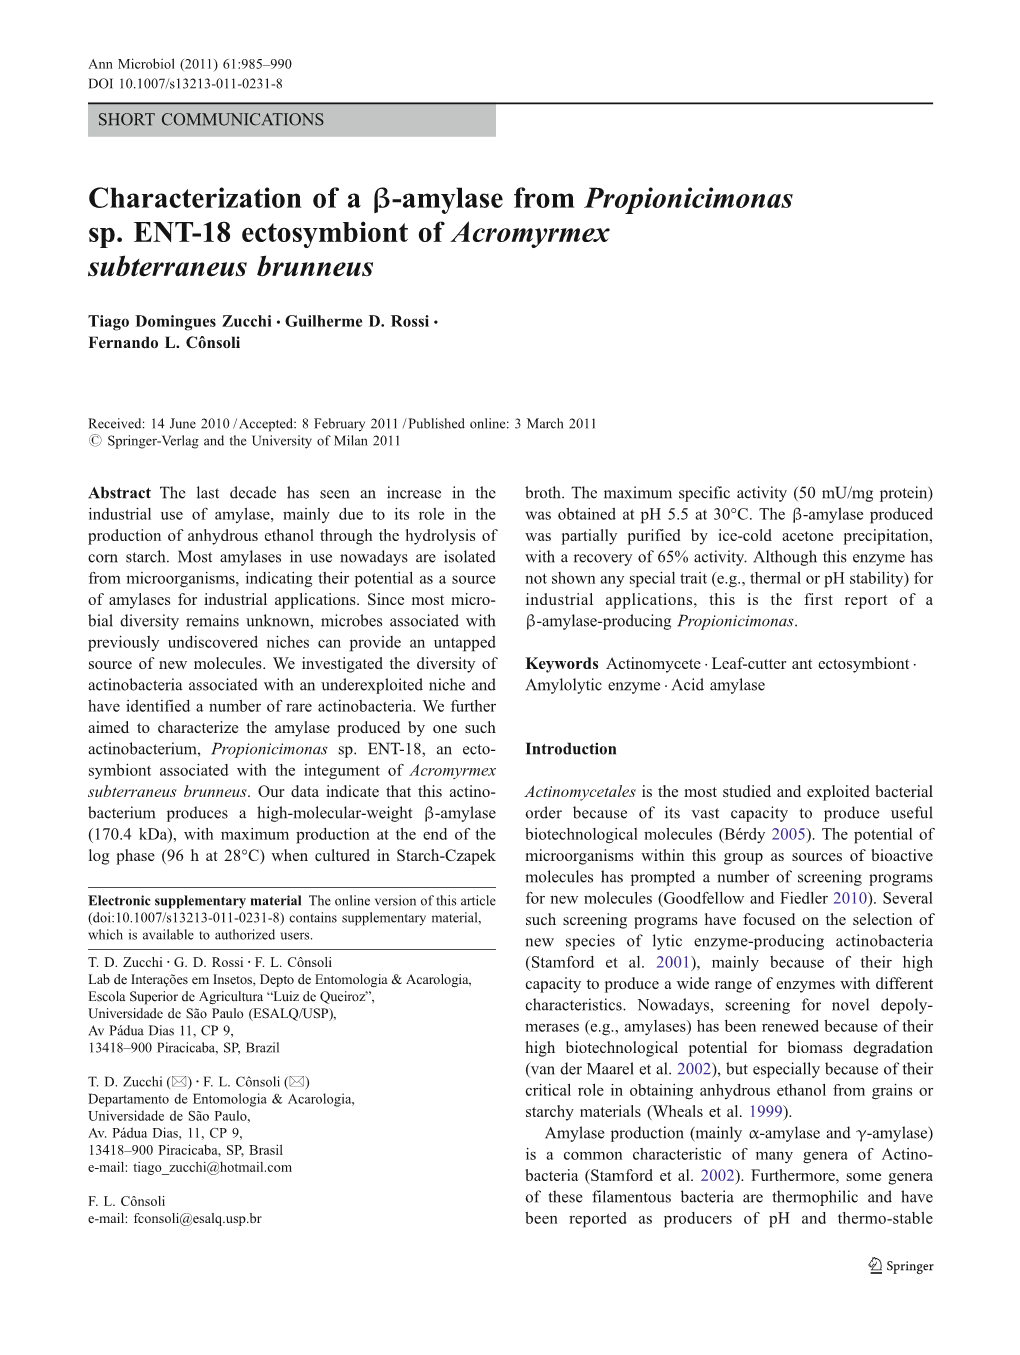 Characterization of a Β-Amylase from Propionicimonas Sp. ENT-18 Ectosymbiont of Acromyrmex Subterraneus Brunneus